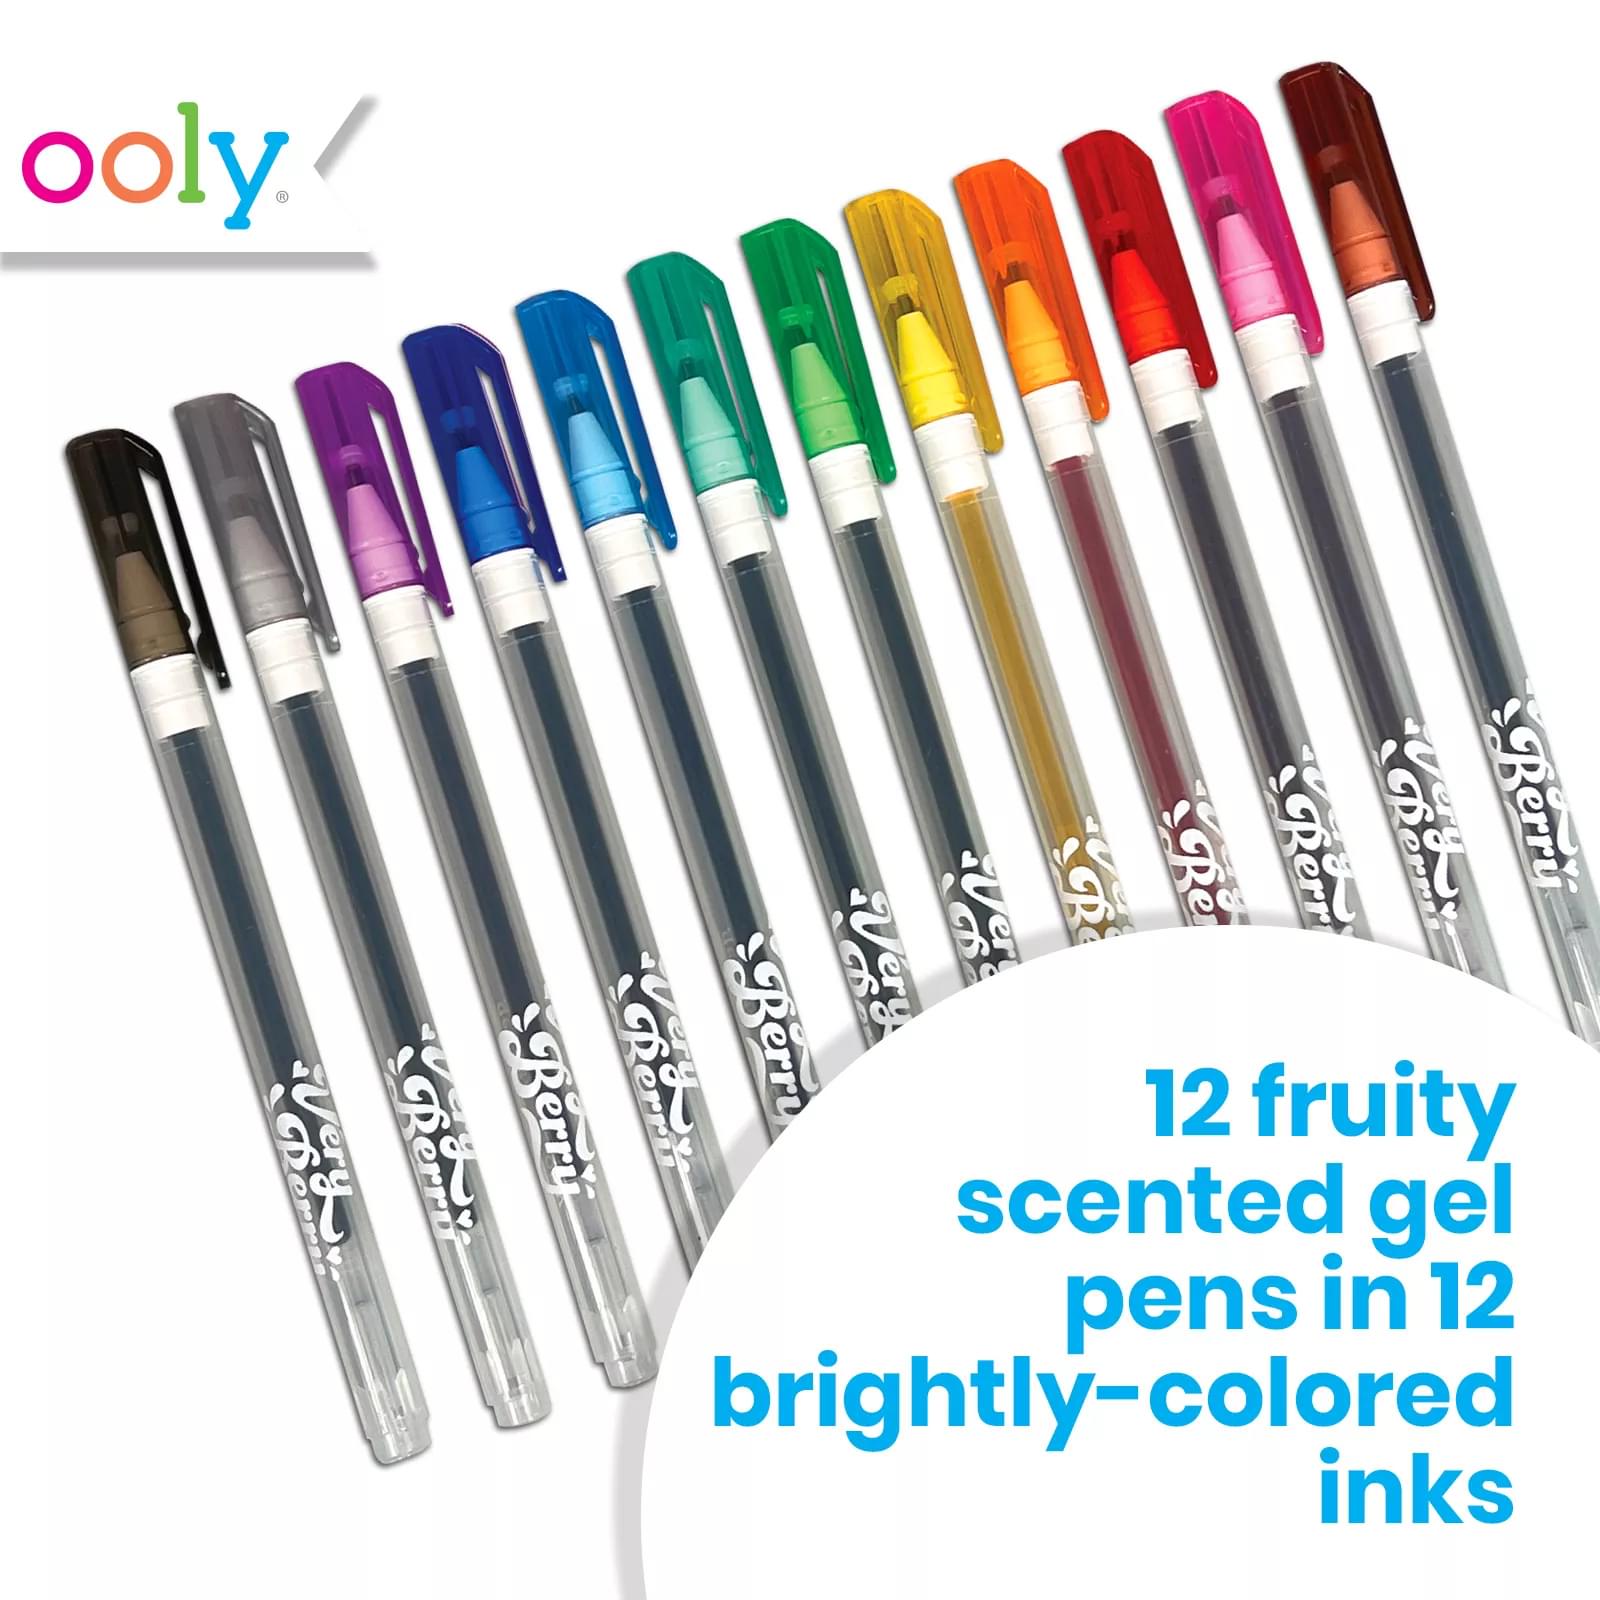 Ooly Mini Doodlers Fruity Scented Gel Pens - Set of 20 – Crown Forever